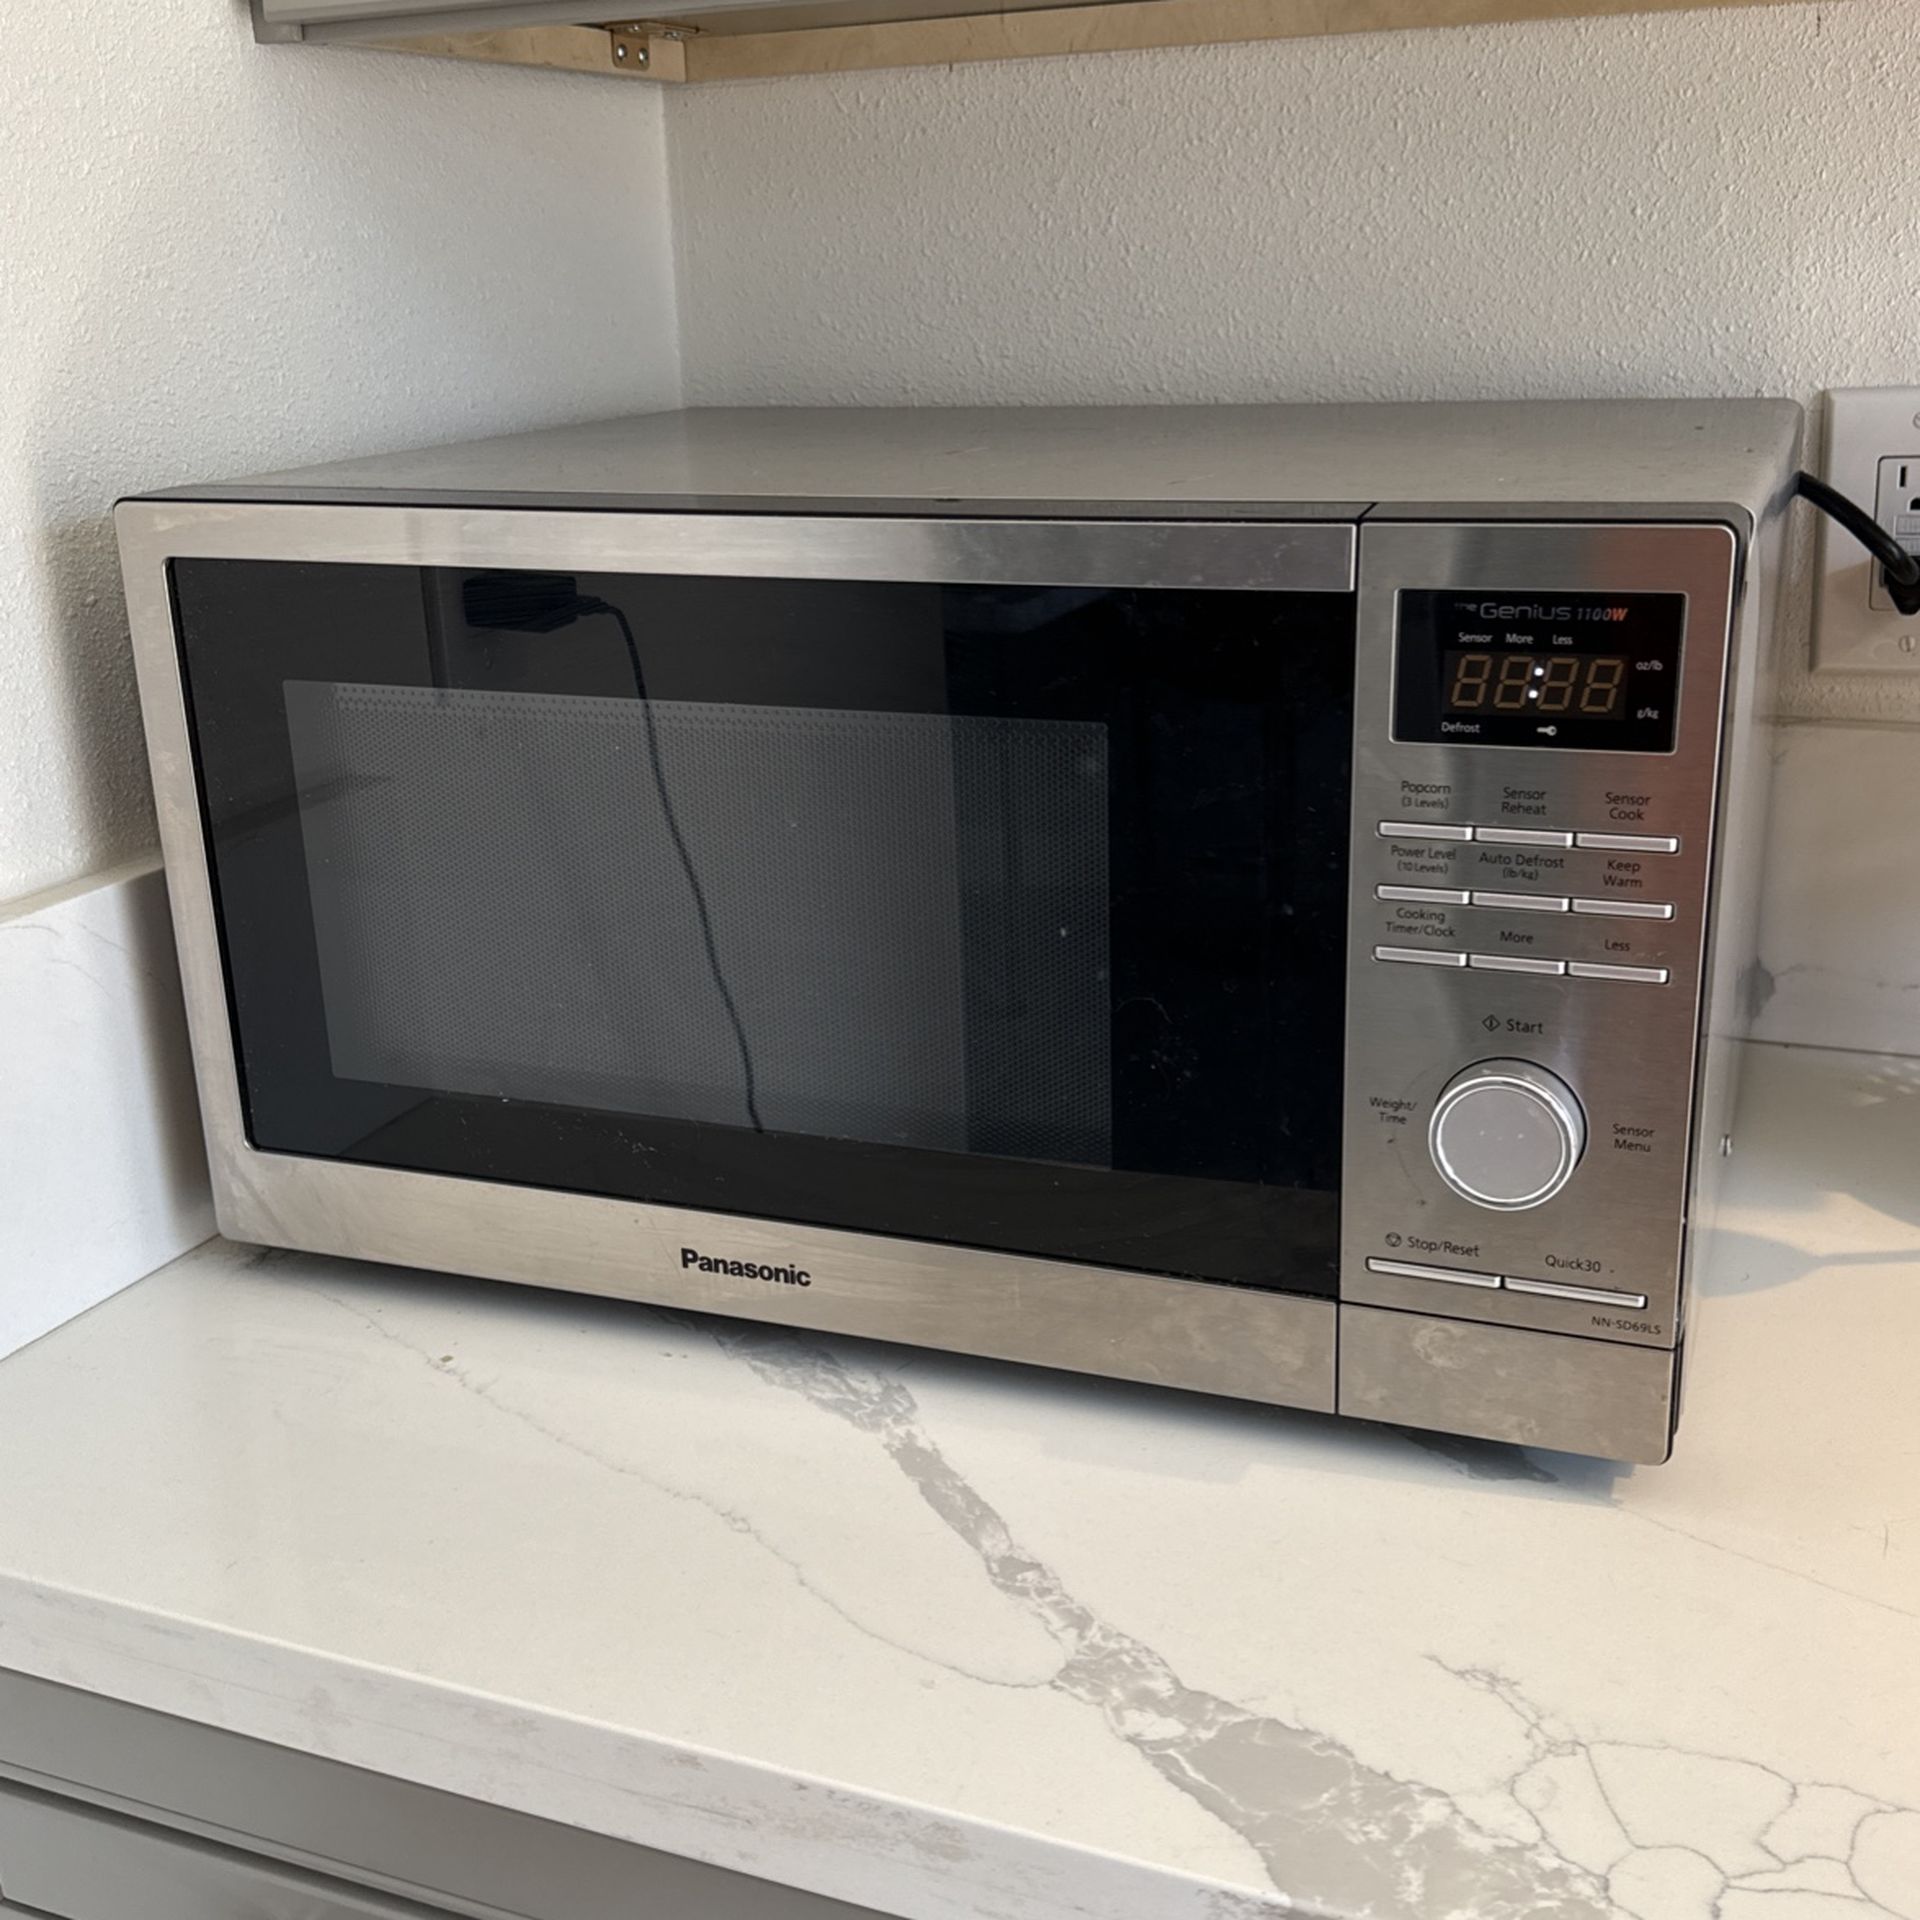 Panasonic 1100W Microwave $150 OBO